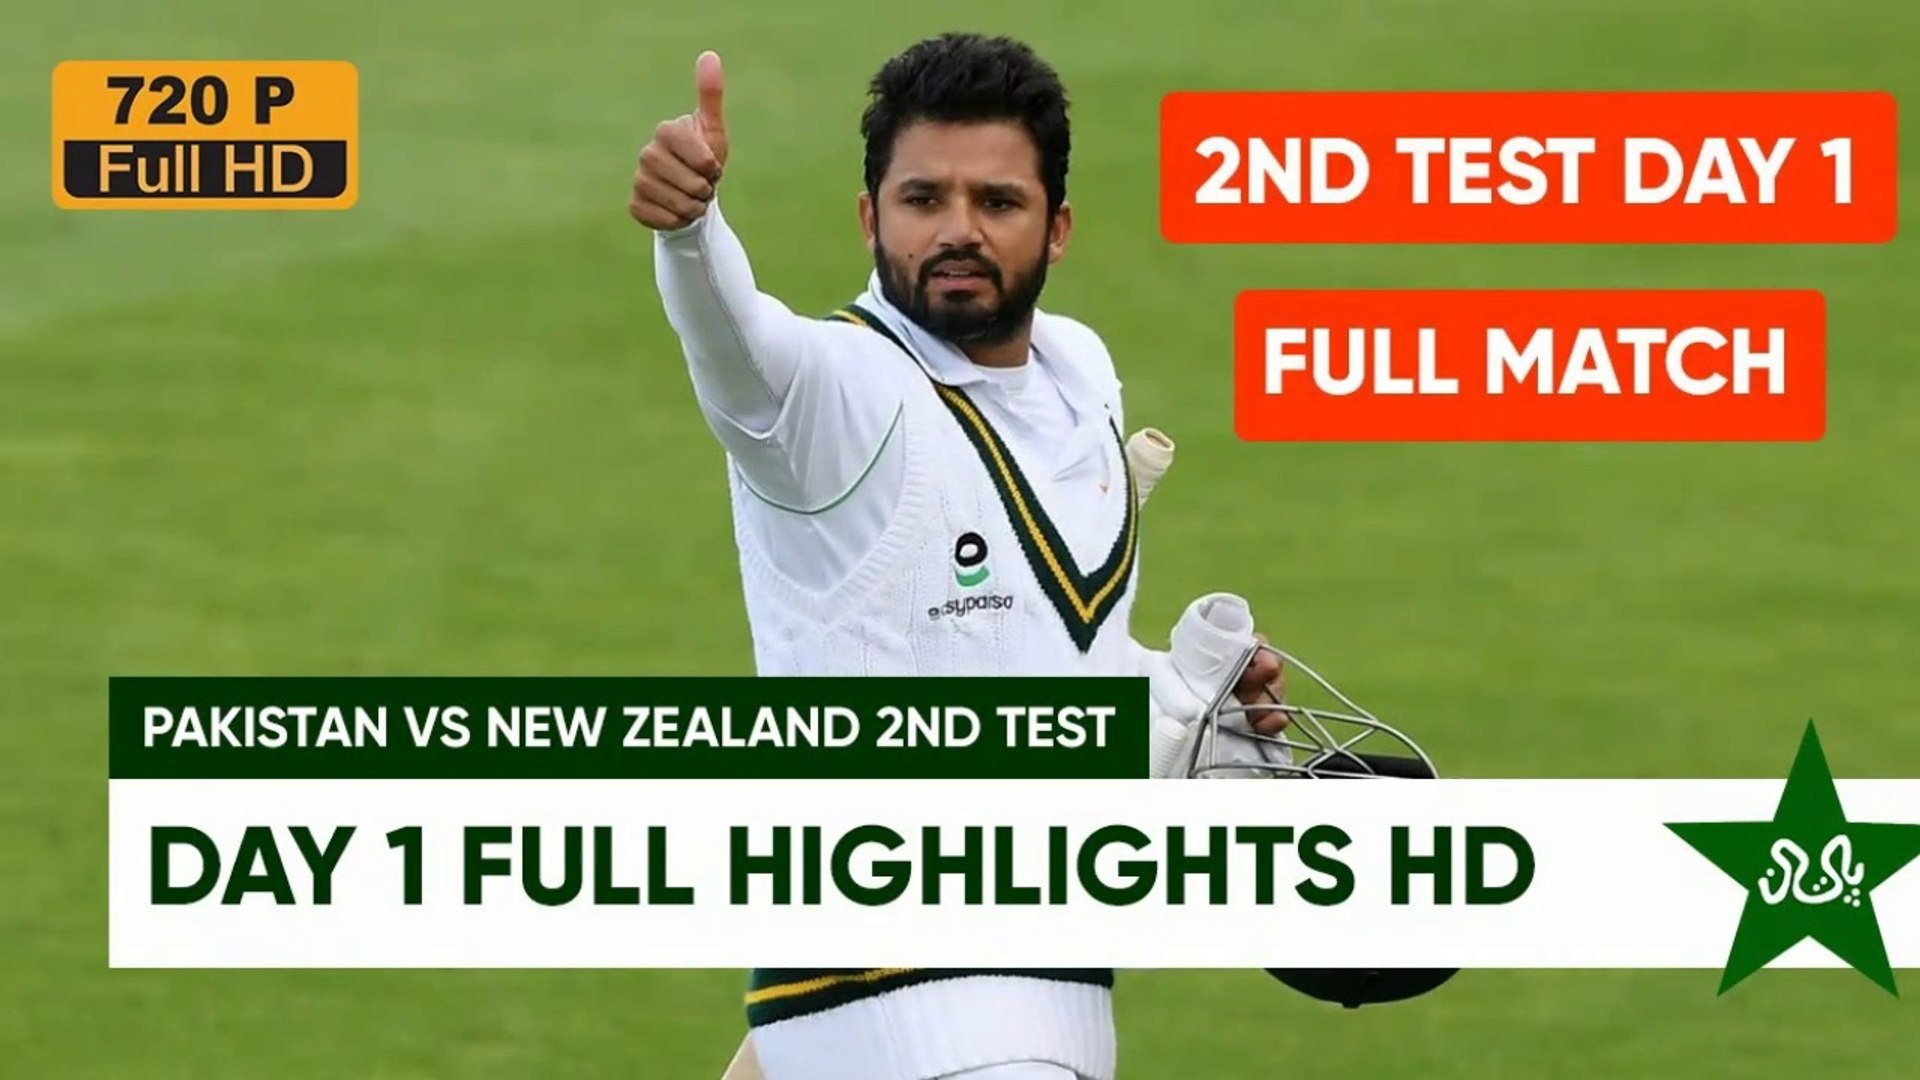 New Zealand vs Pakistan 2nd Test Match Highlights 2021 Day 1 highlights 